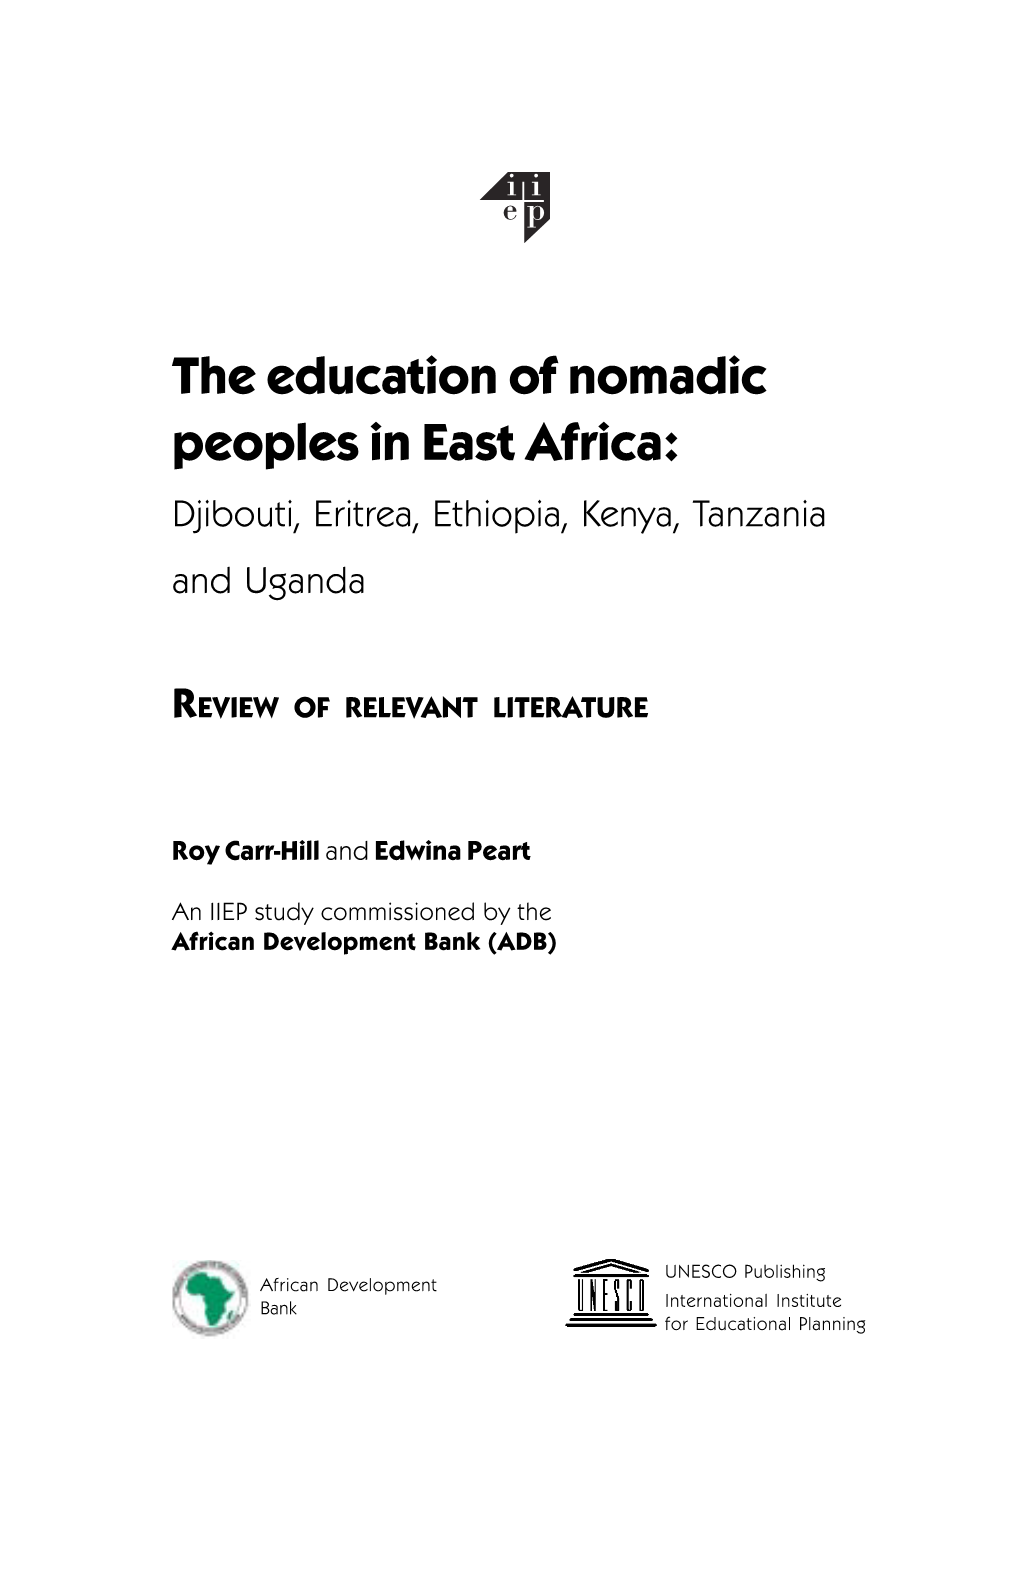 The Education of Nomadic Peoples in East Africa: Djibouti, Eritrea, Ethiopia, Kenya, Tanzania and Uganda